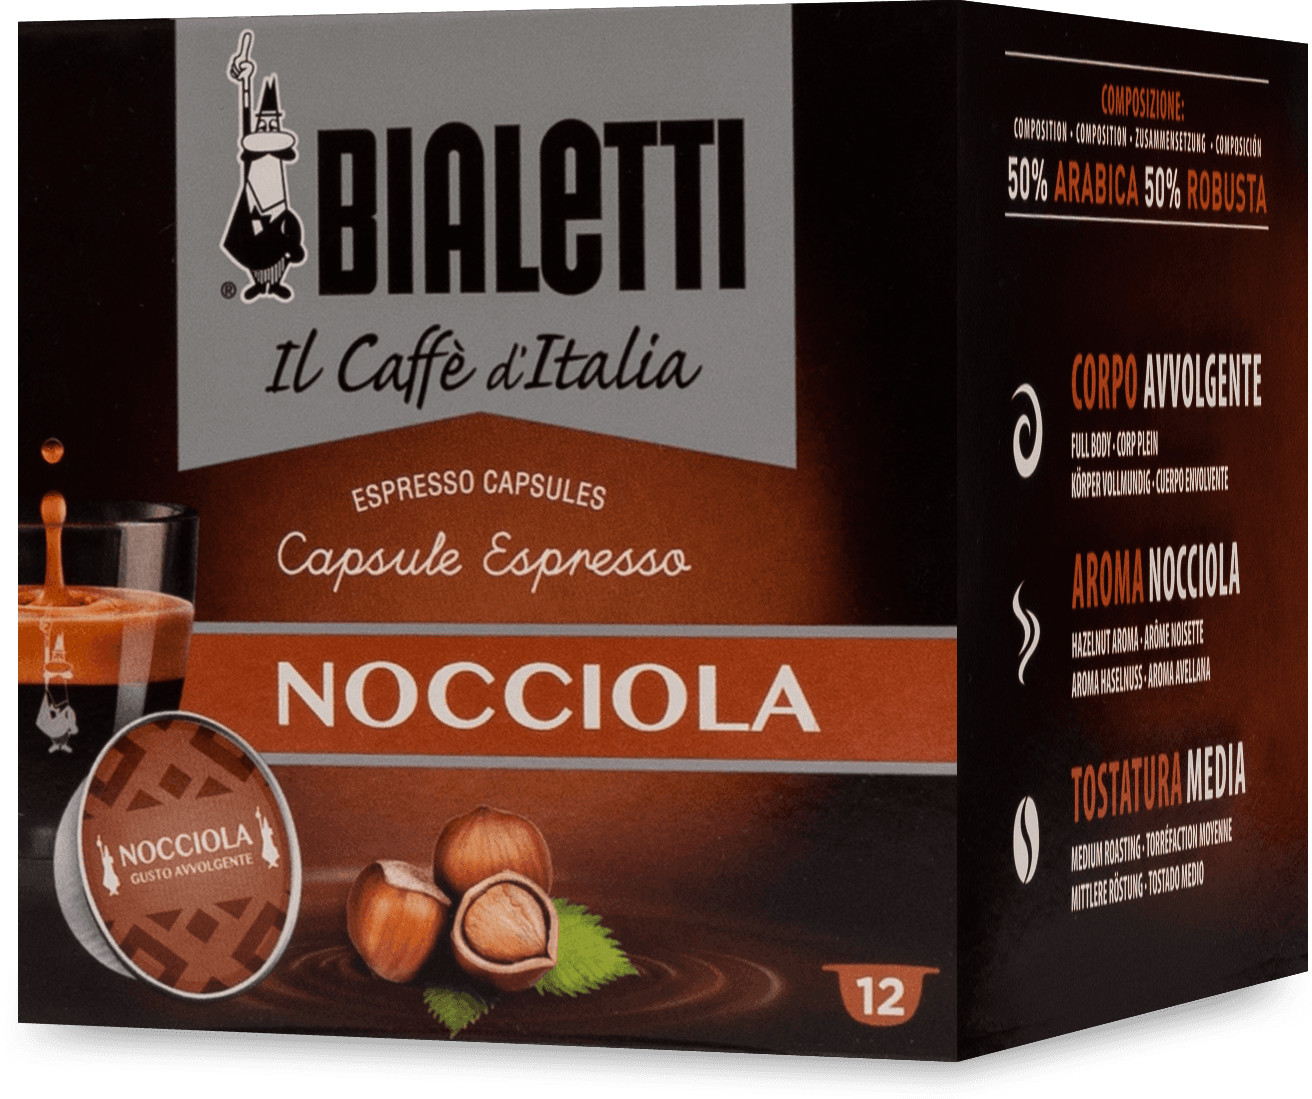 72 capsule Bialetti Miscela Napoli in offerta